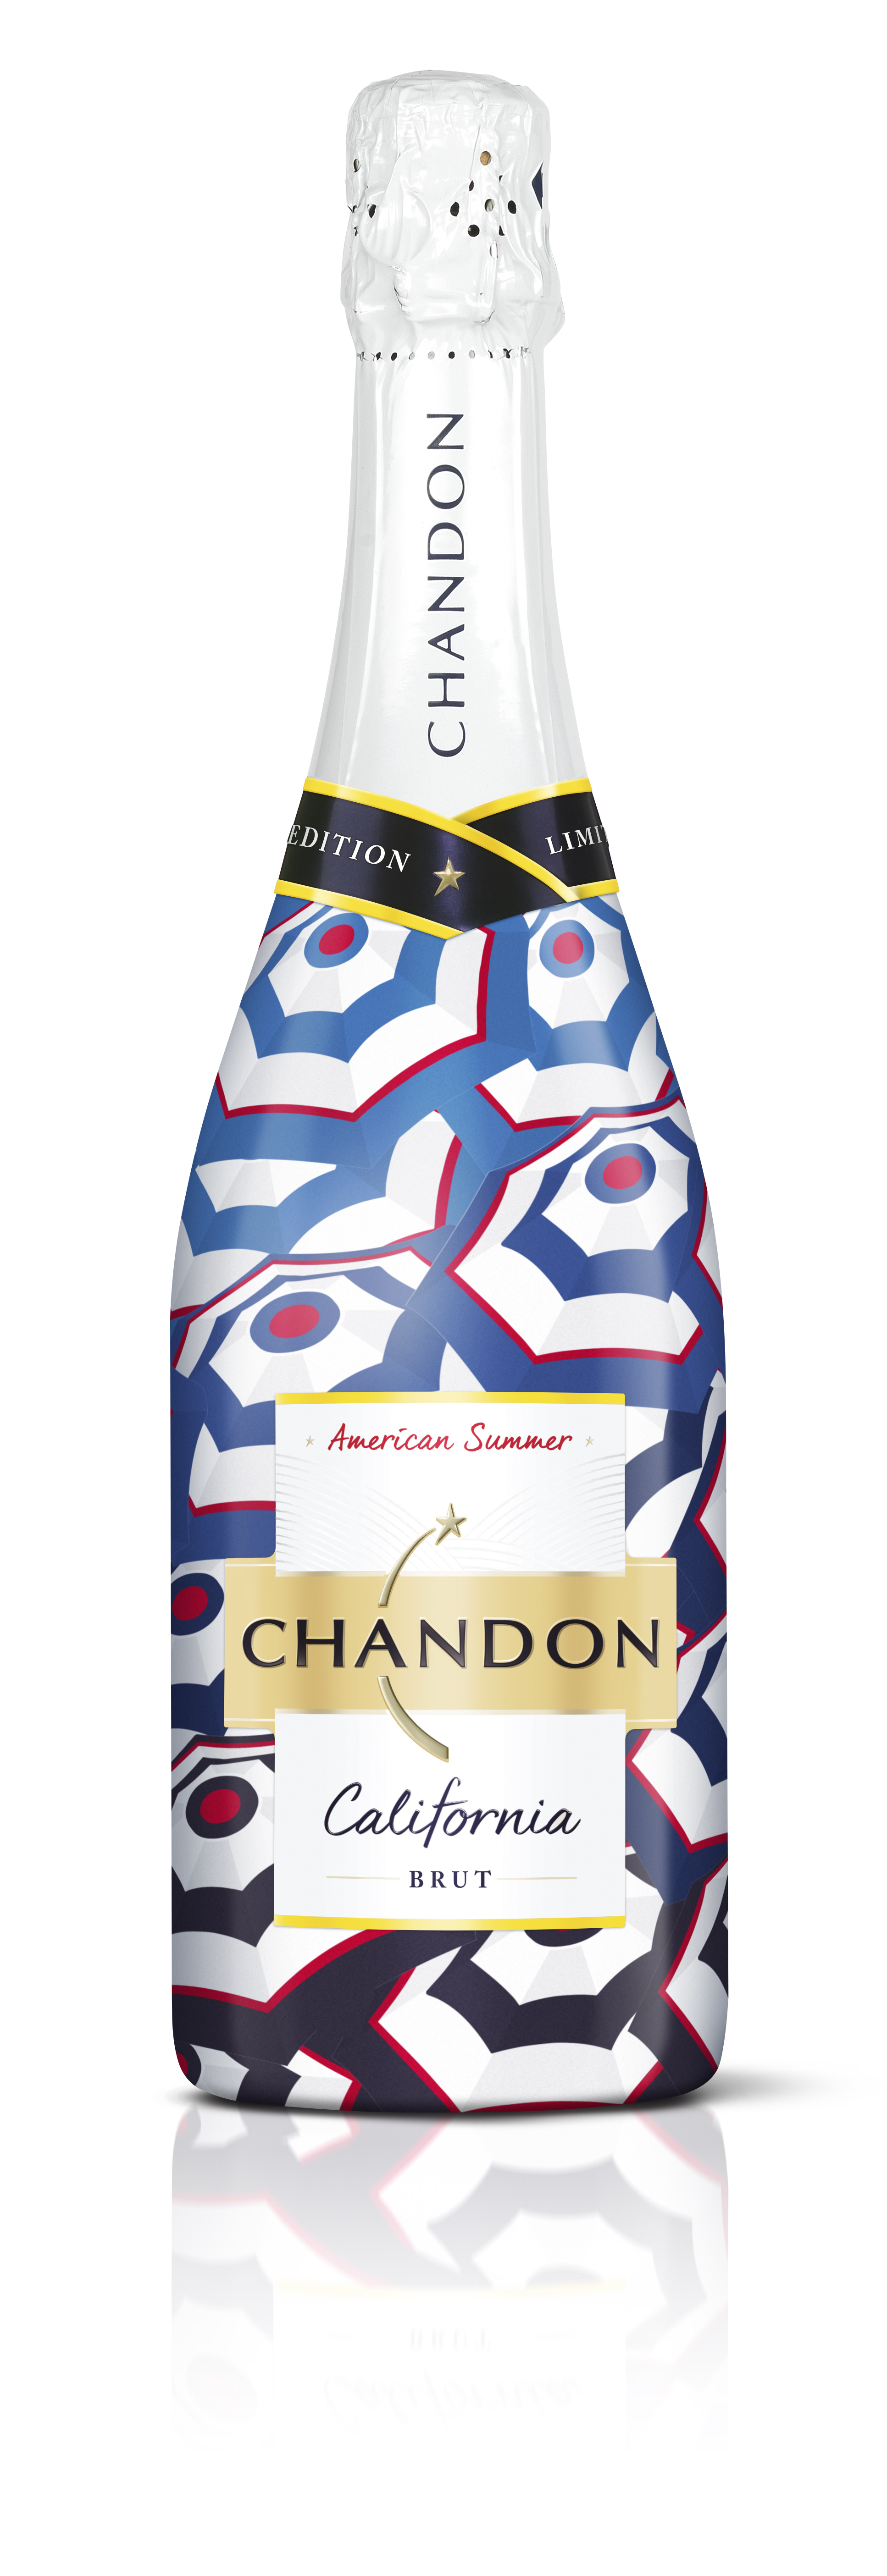 Chandon Brut California Limited Edition